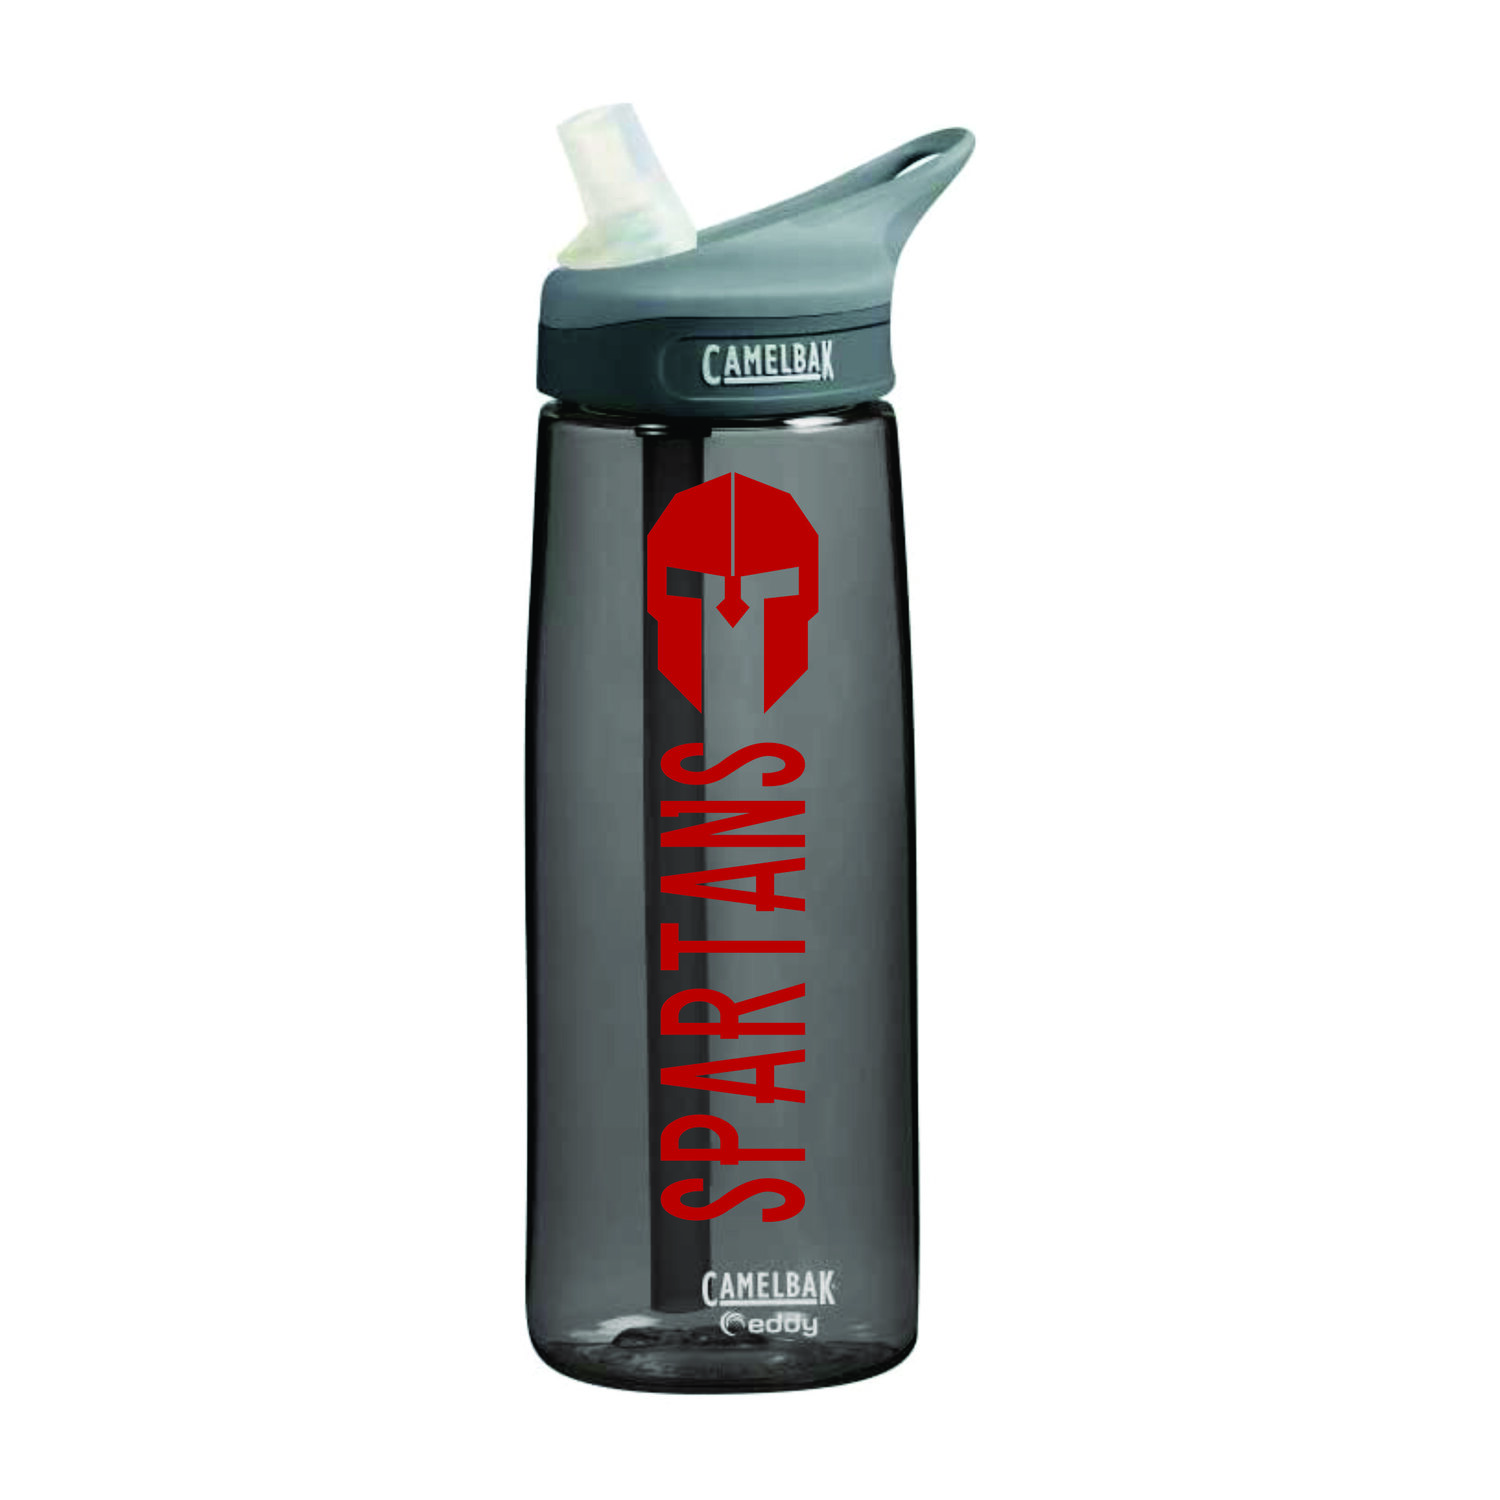 Saml op Jeg spiser morgenmad brydning Spartans Camelbak 0.75L Eddy Water Bottle — Hats Off